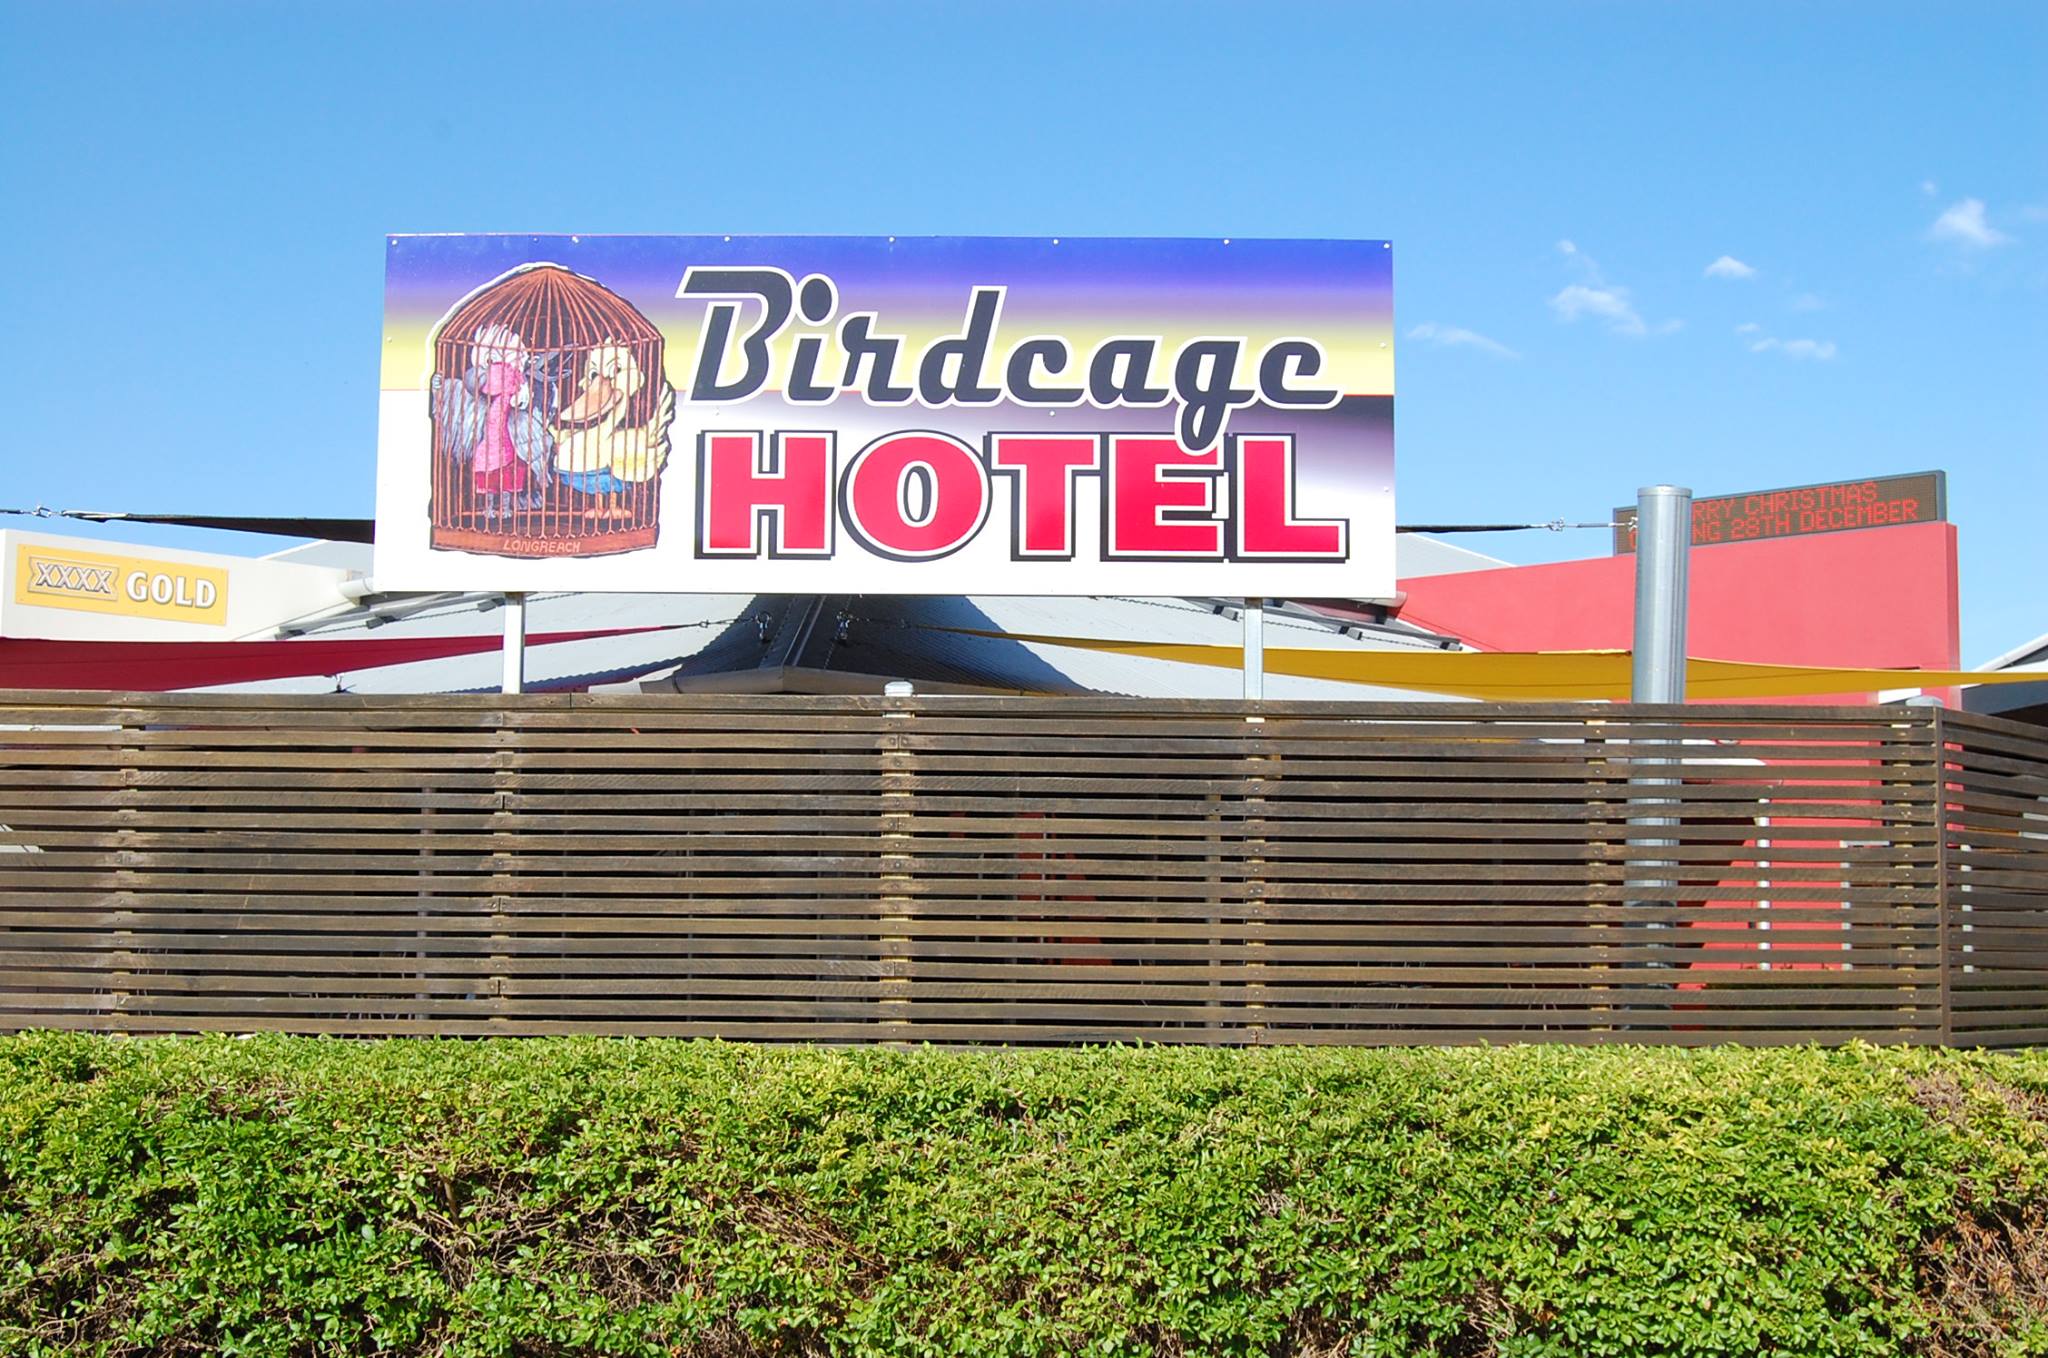 Birdcage Hotel